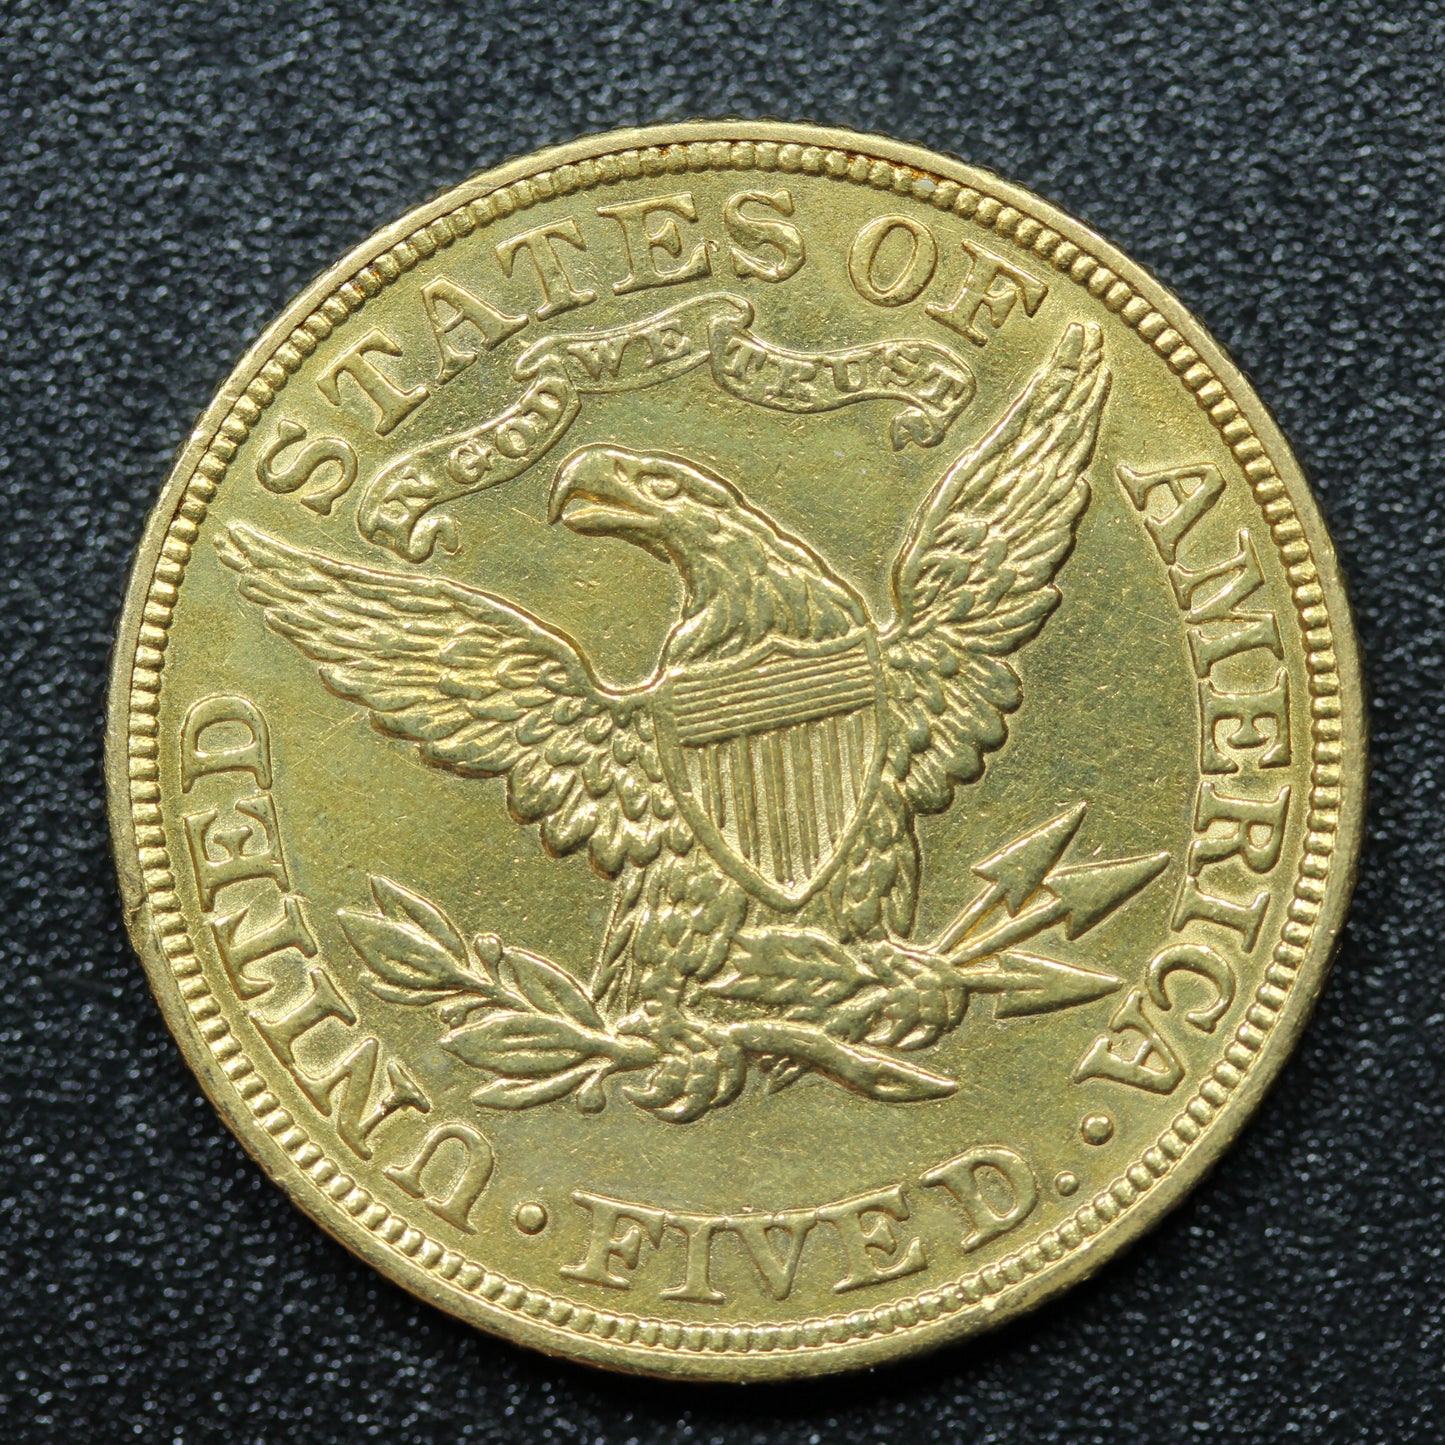 1904 $5 US Liberty Head Half Eagle Gold Coin - Philadelphia